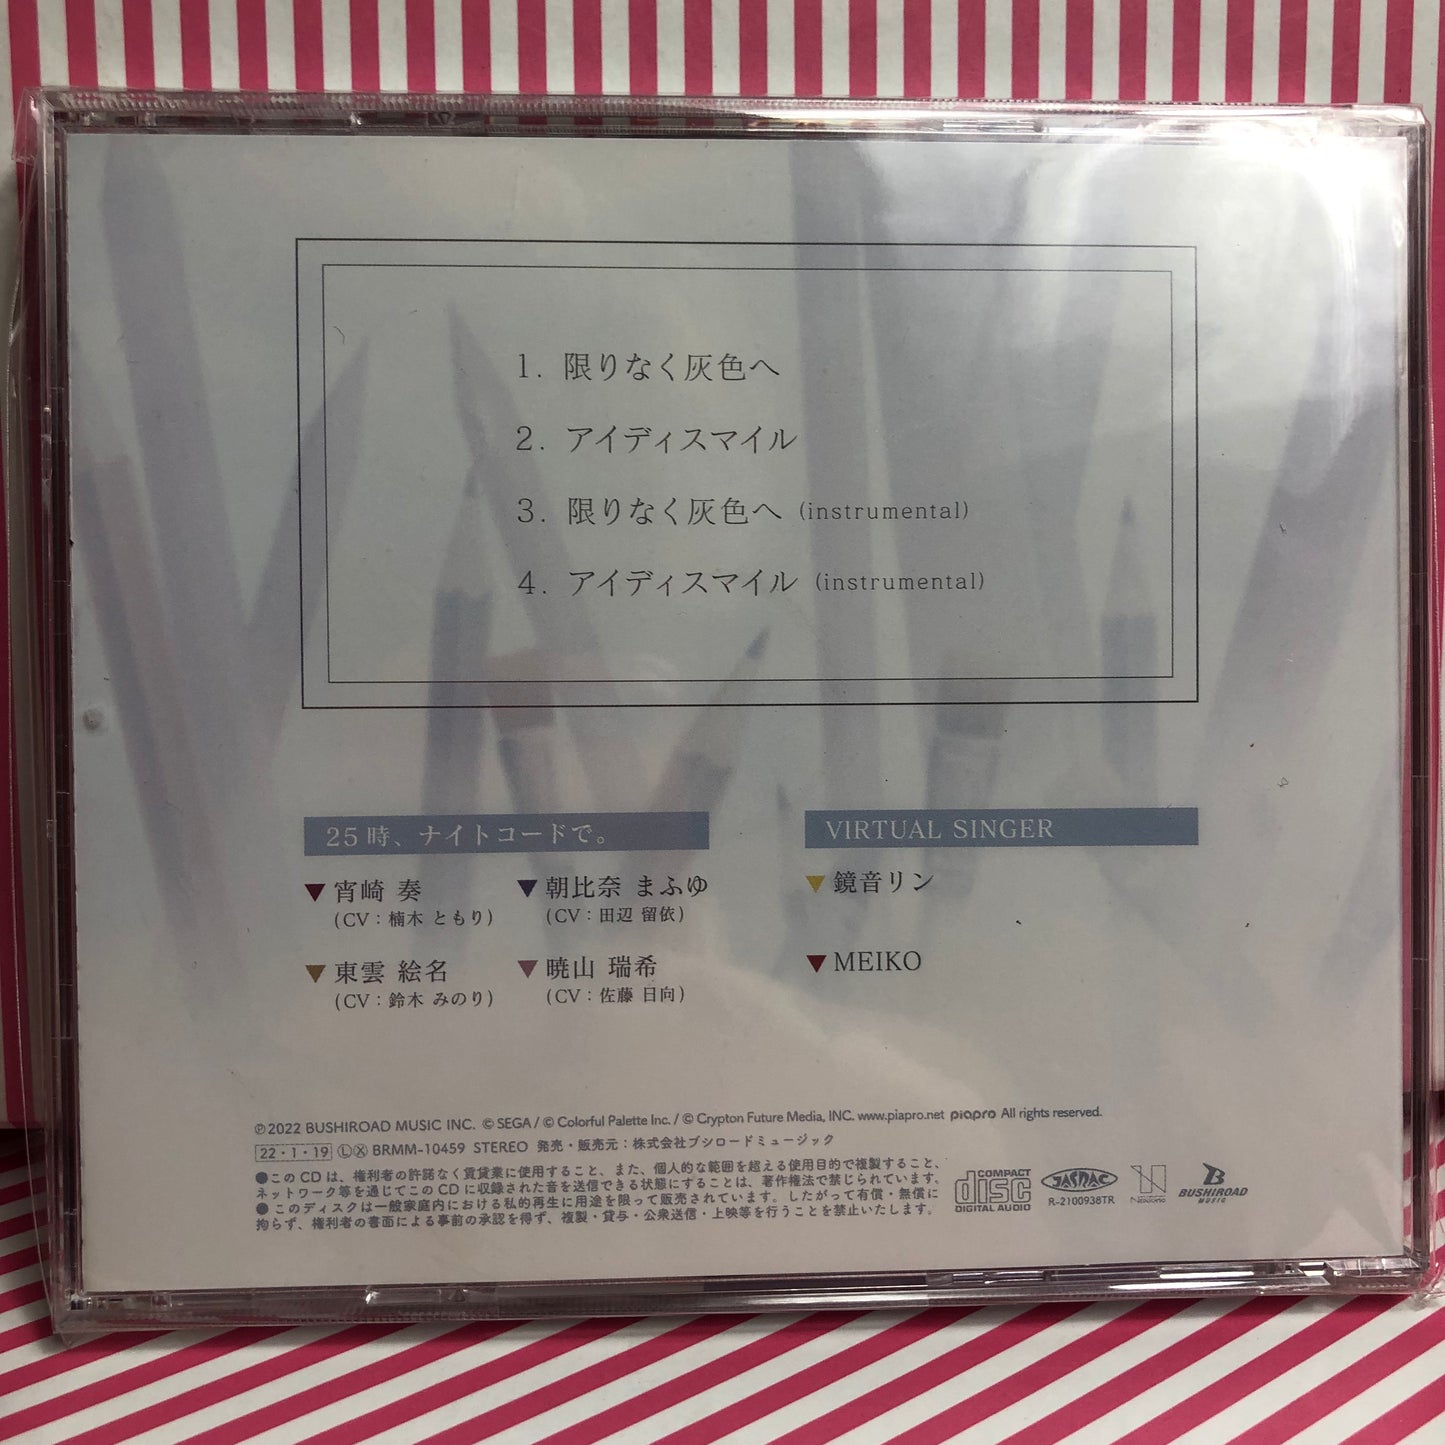 Nightcord at 25:00 - Kagirinaku haiiro he / Idsmile 2nd Single CD Project Sekai Colorful Stage! ft. Hatsune Miku